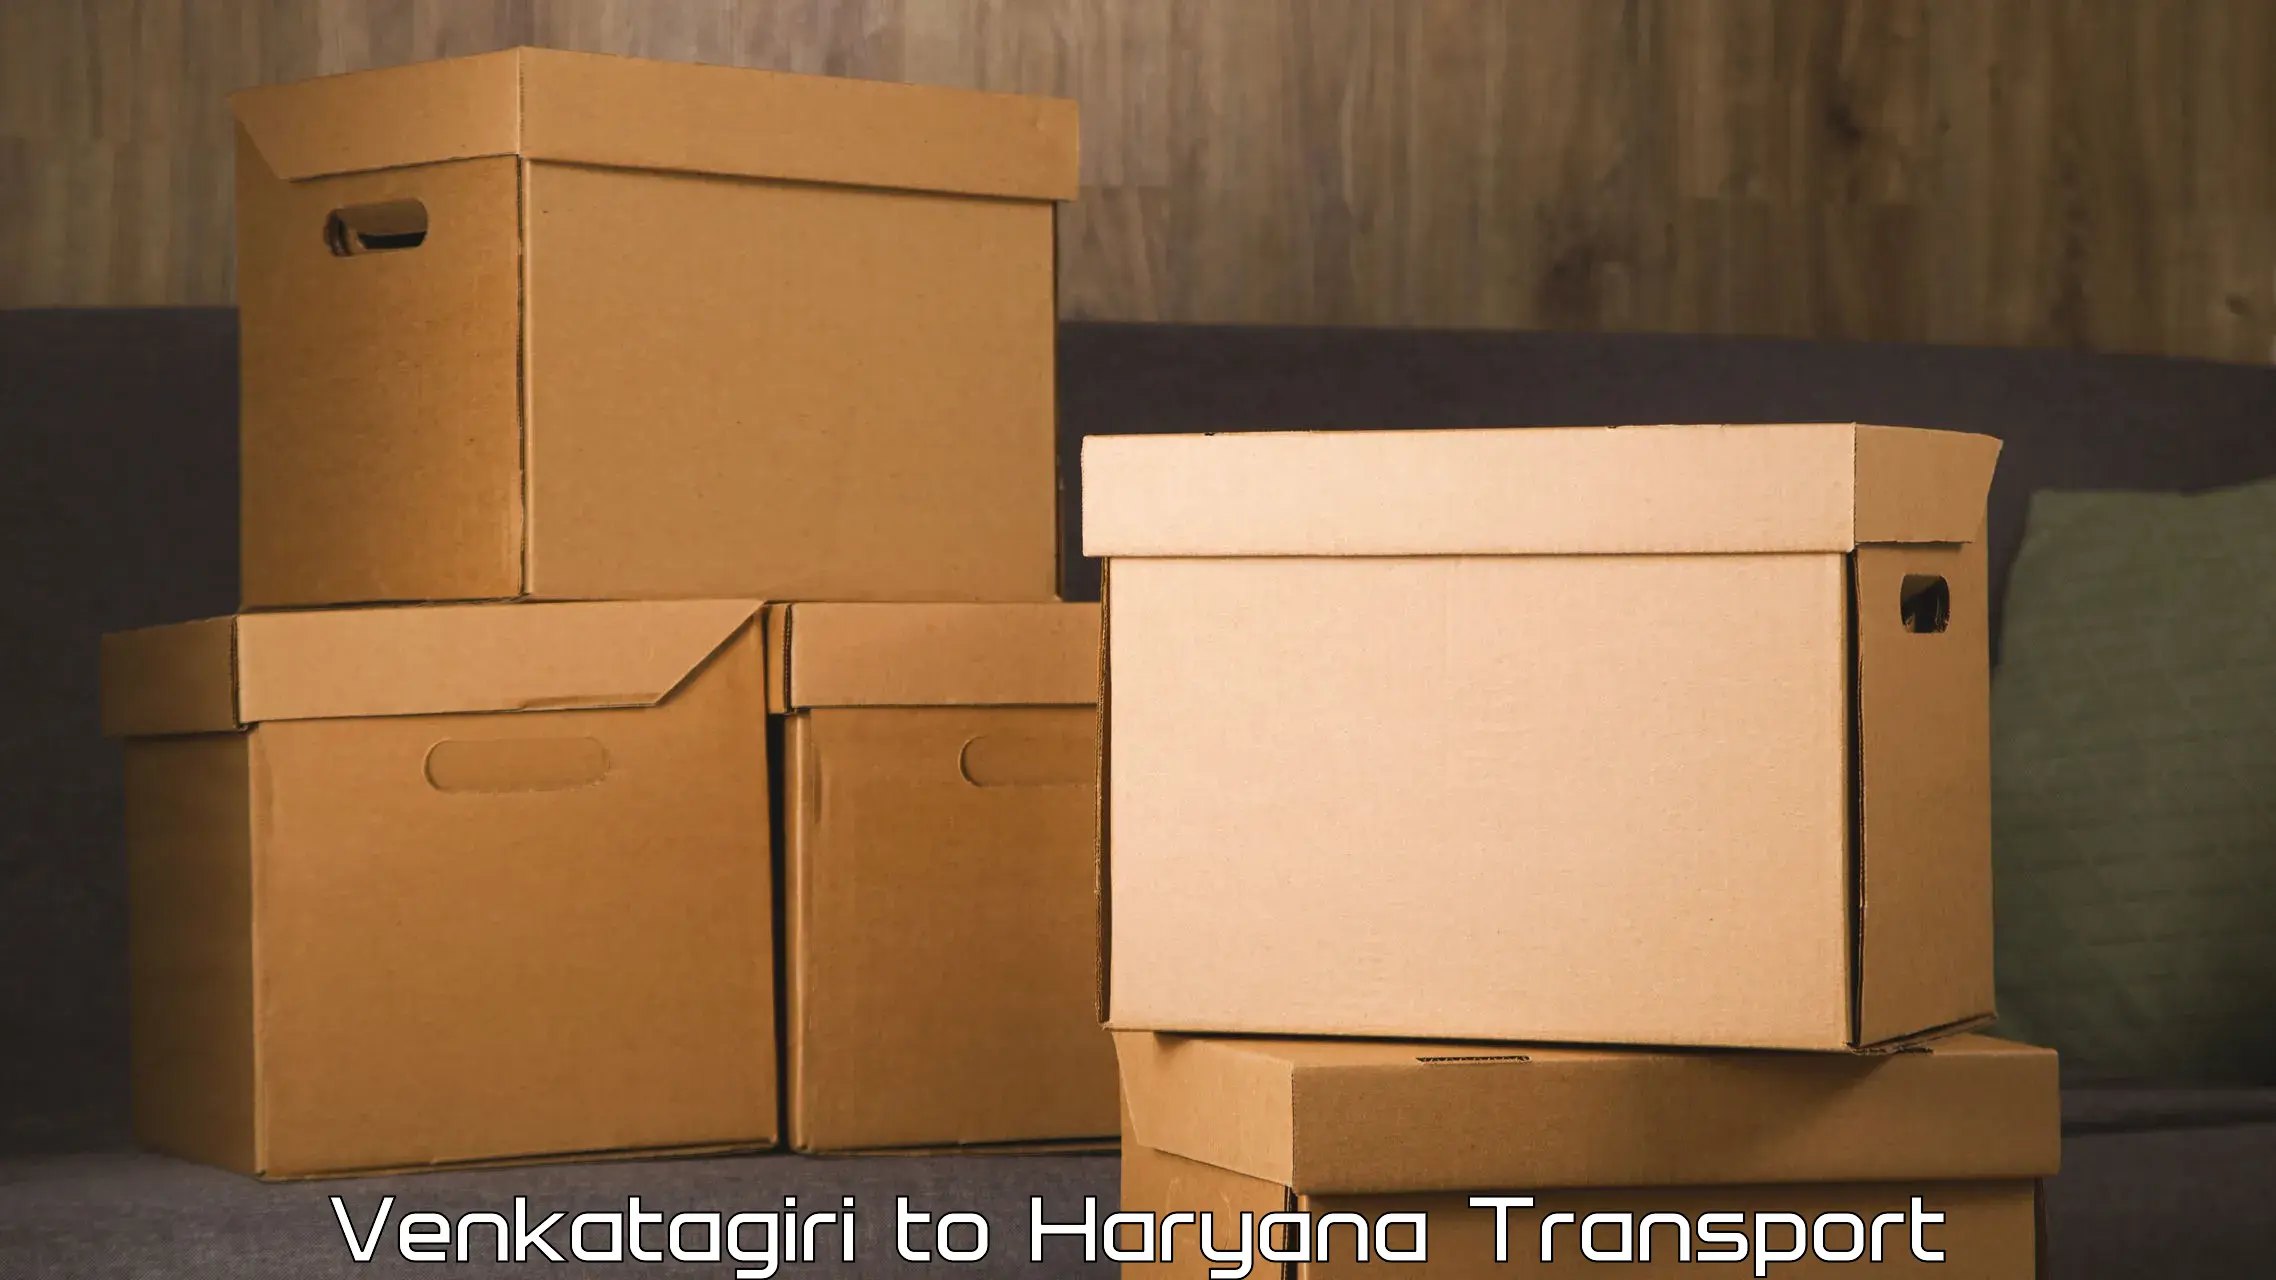 Transport in sharing Venkatagiri to Narwana